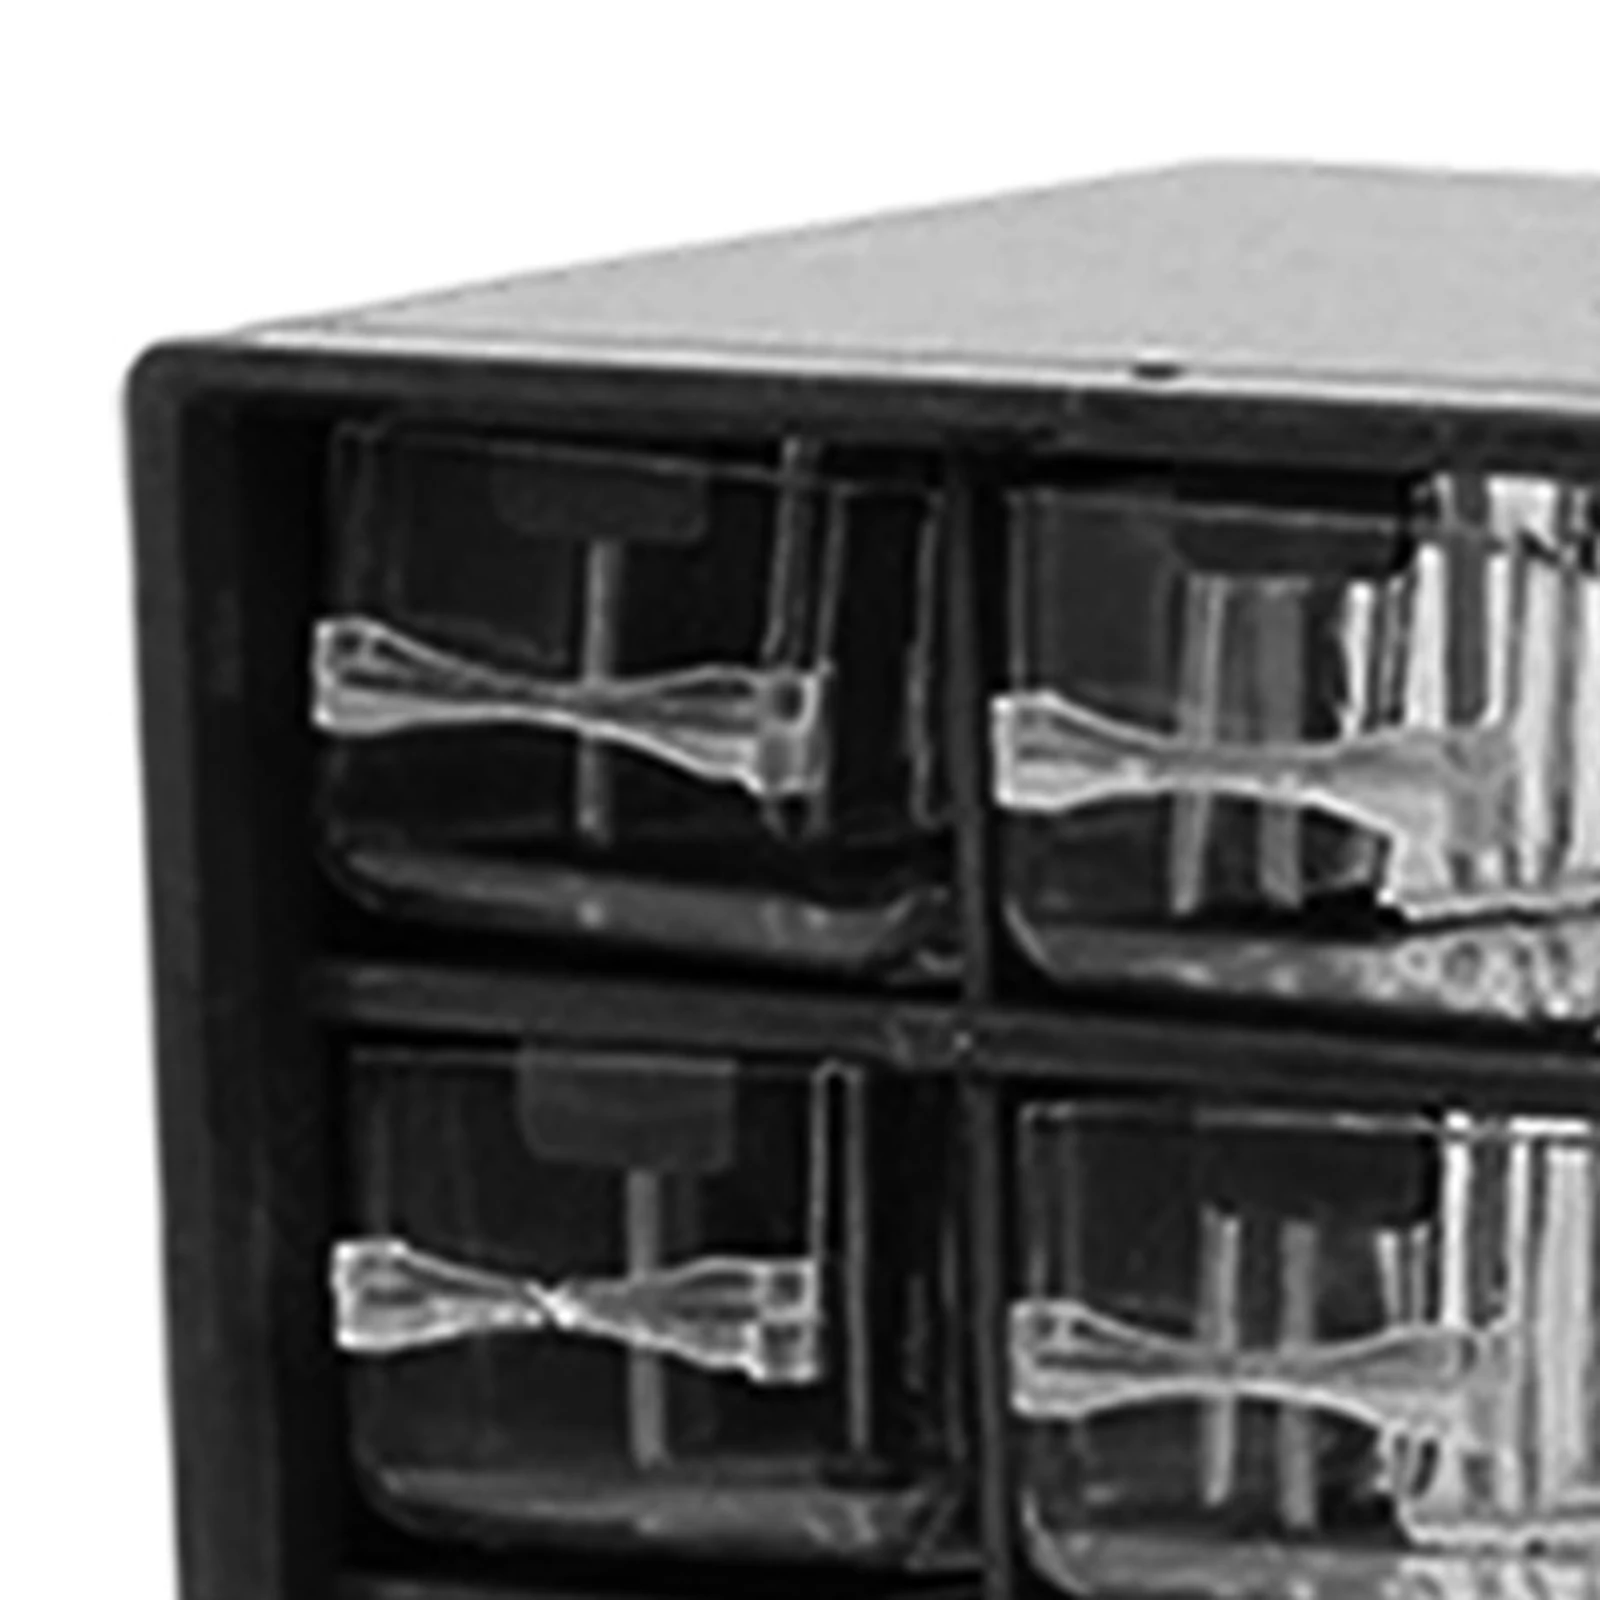 https://ae01.alicdn.com/kf/S0dd5f8609dff4128ab2e75c35b451297V/25-Drawer-Parts-Storage-Box-Classification-Component-Box-Storage-Organizer-Bins-Craft-Supplies-for-Crafts-Bolts.jpeg